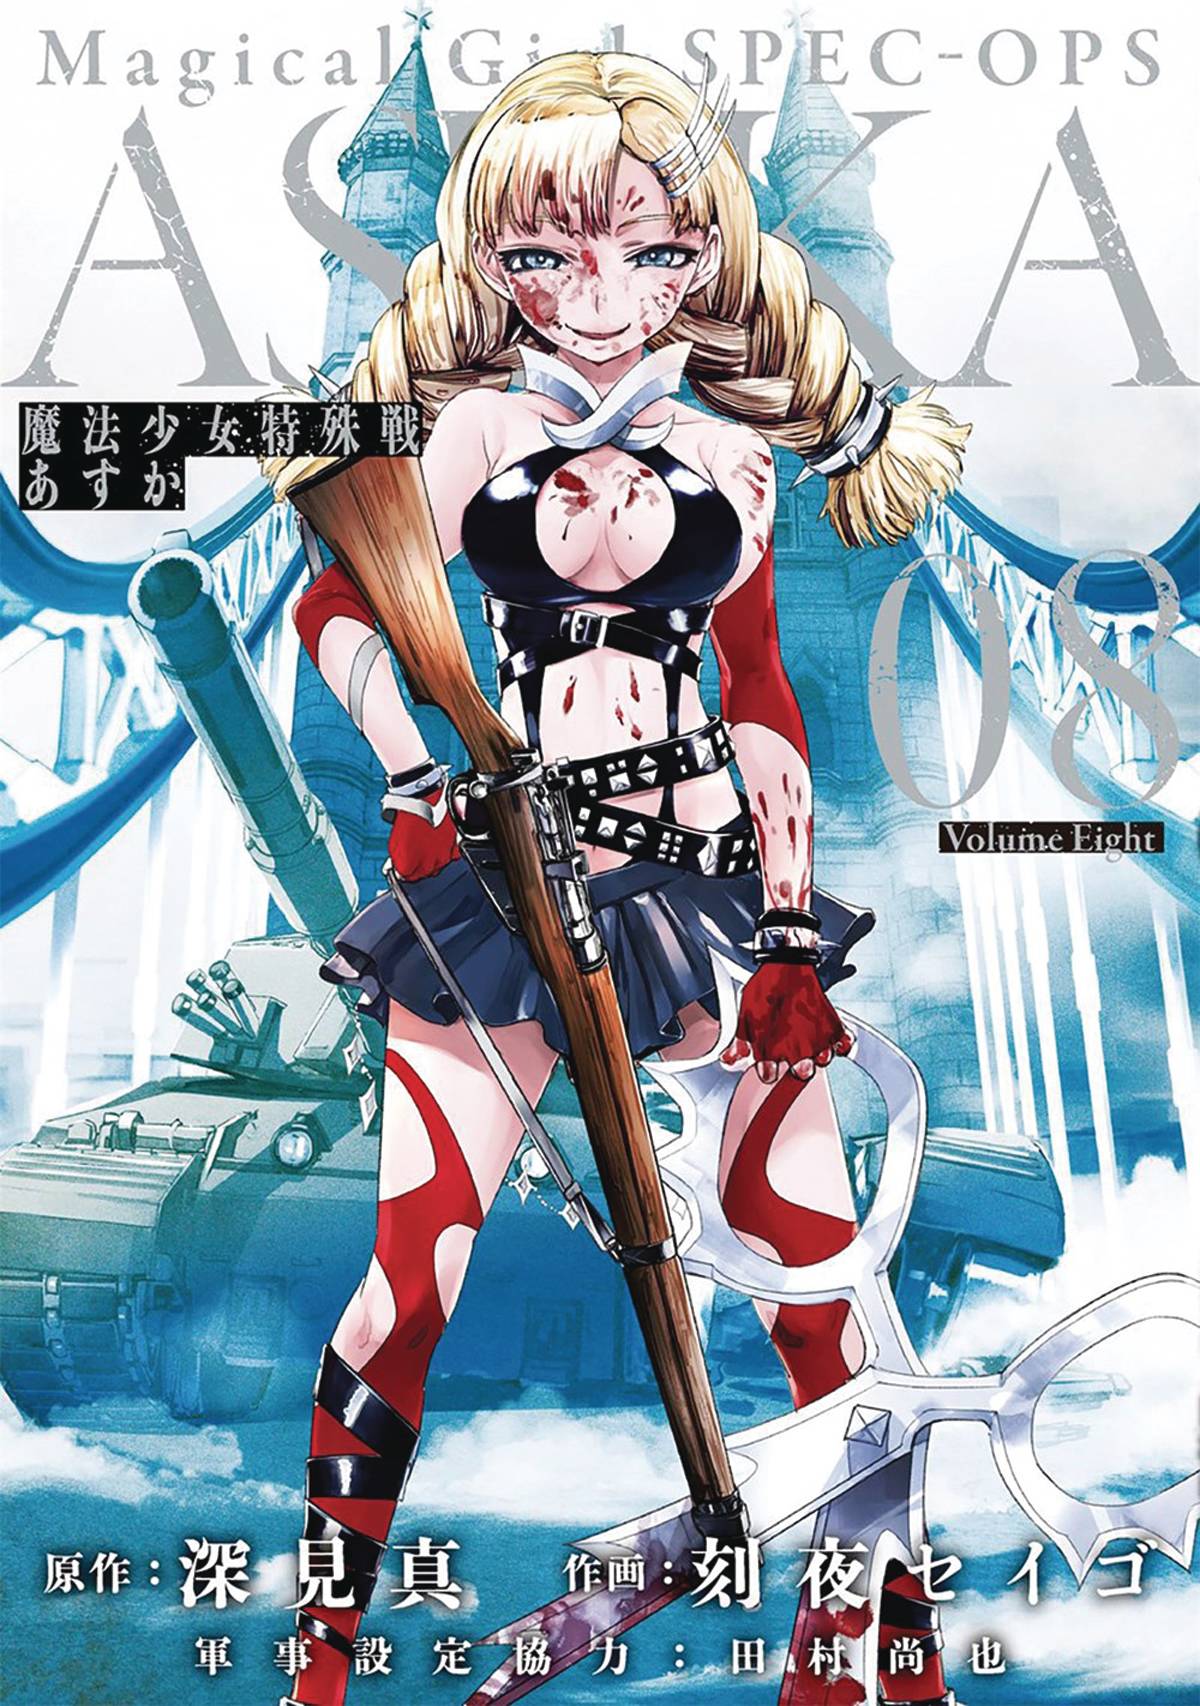 Magical Girl Special Ops Asuka Manga Volume 8 (Mature)